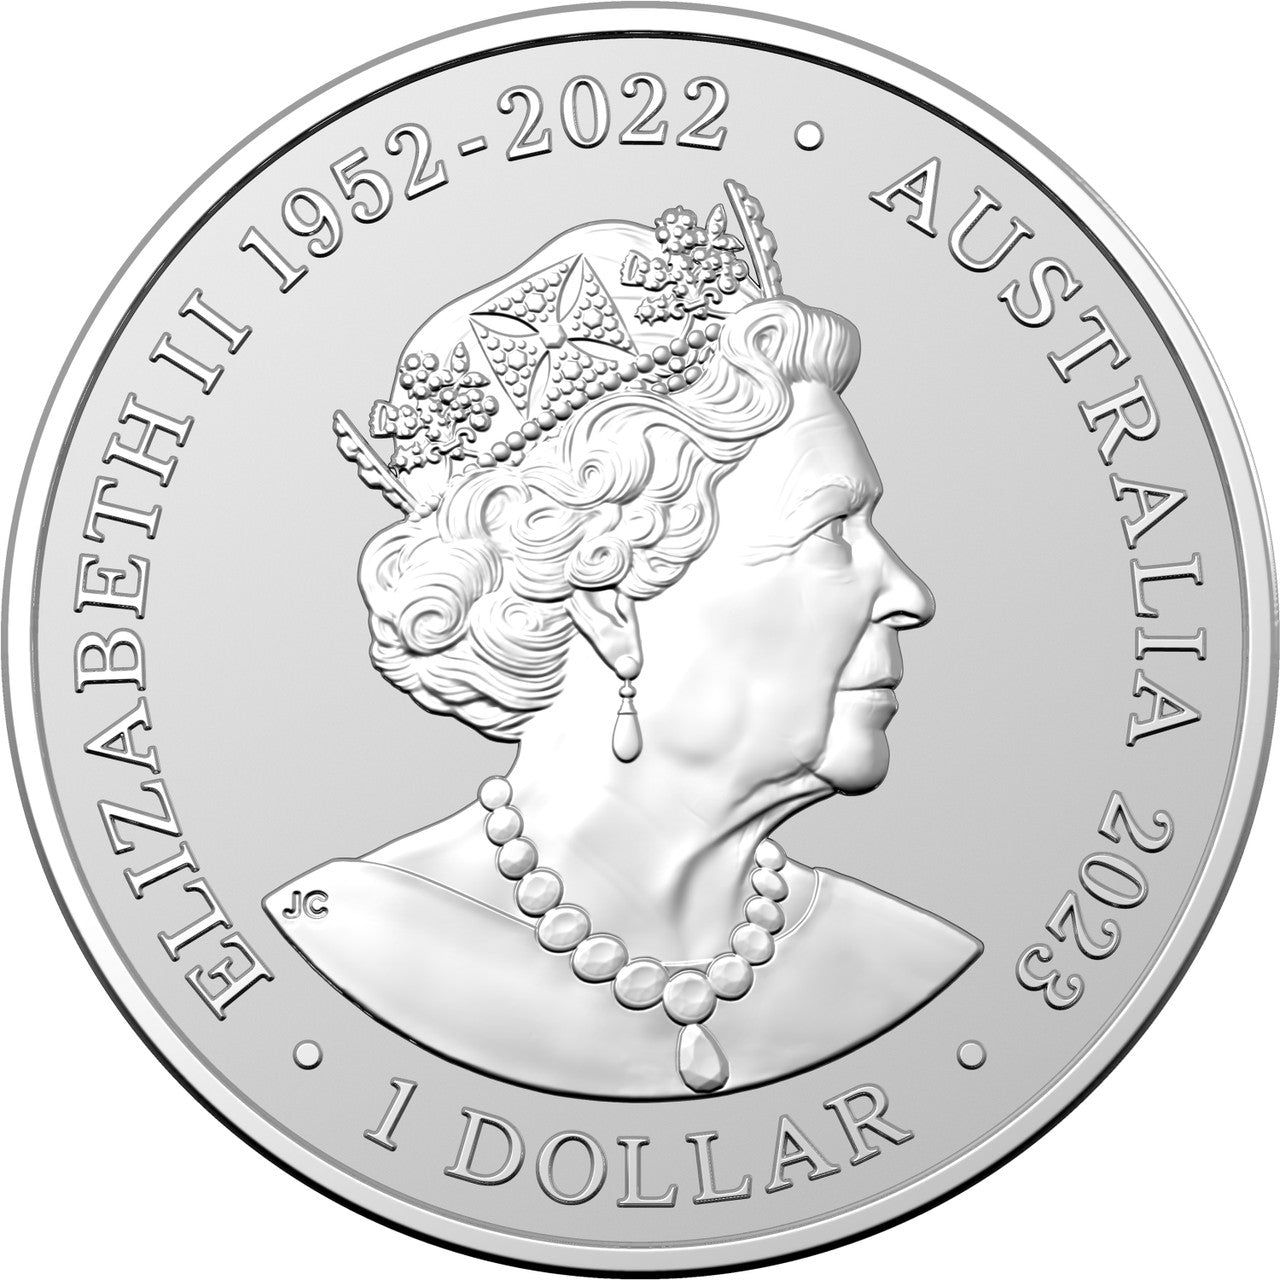 Royal Australian Mint Sydney Opera House 50th Anniversary 2023 $1 1oz Silver Brilliant Uncirculated InvestmentCoin